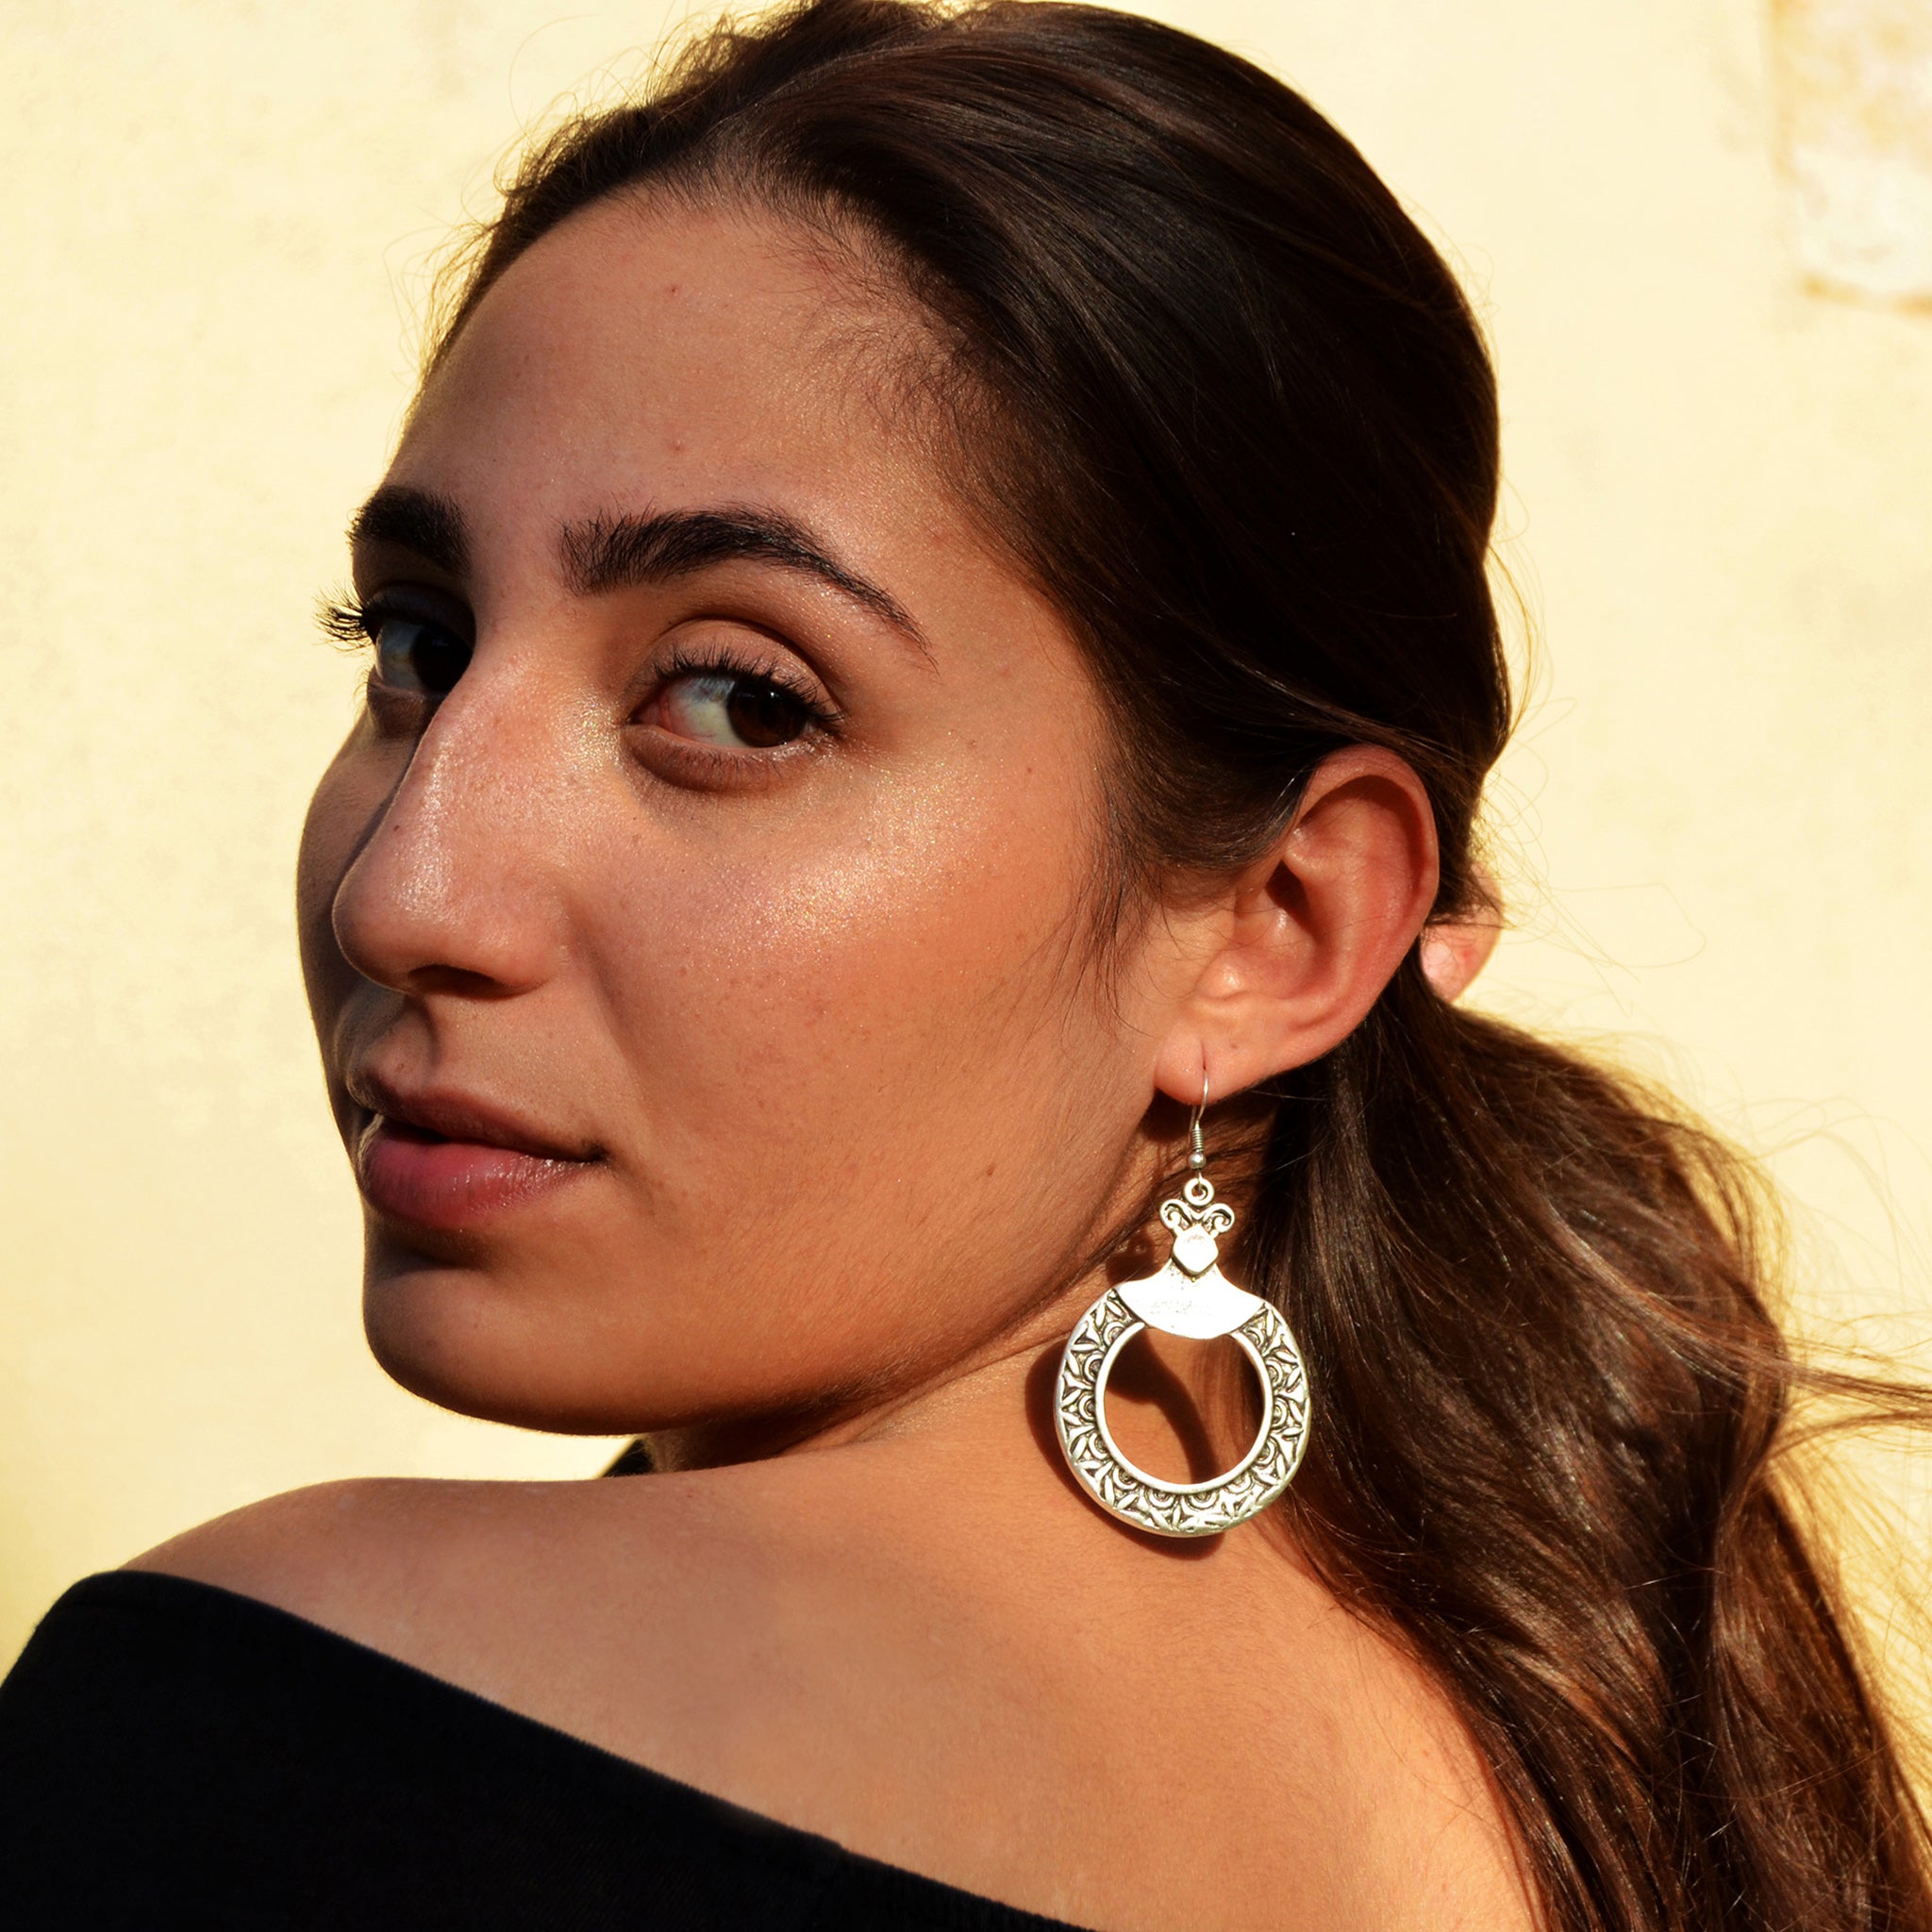 Young woman with tribal hoop earrings